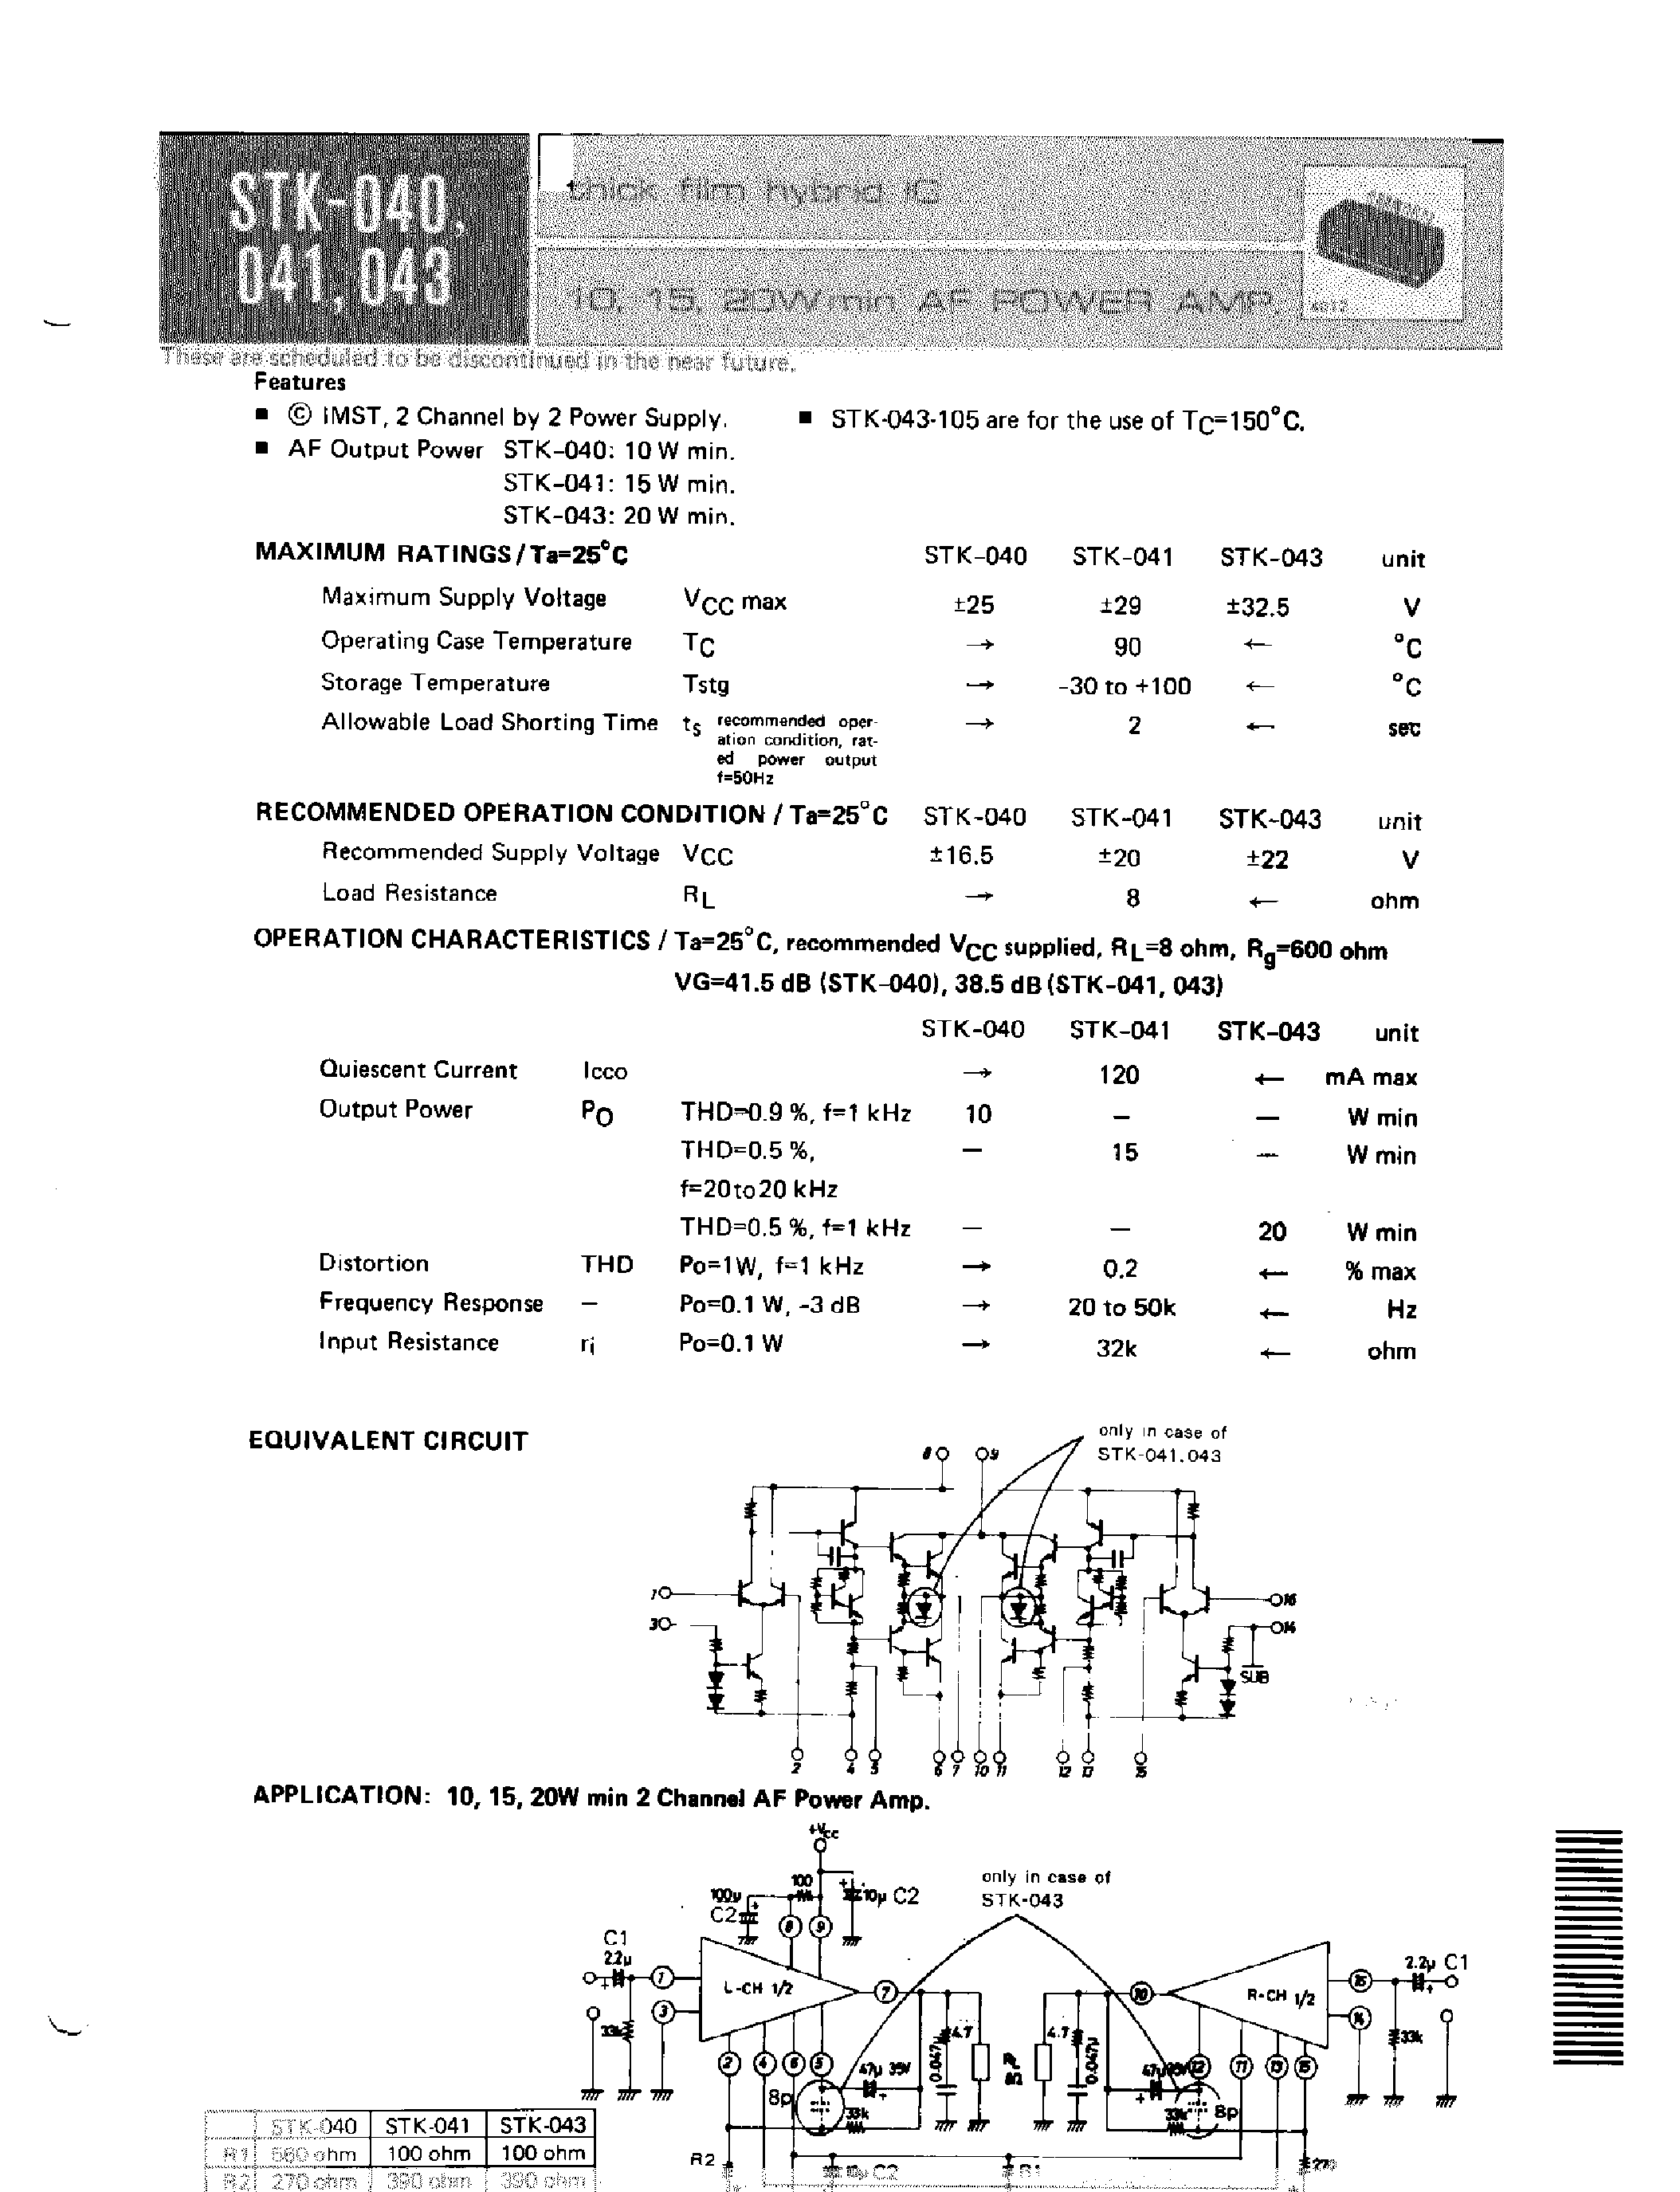 Datasheet STK-040 - (STK040 - STK043) 10 / 15 / 20W MIN AF POWER AMP page 1